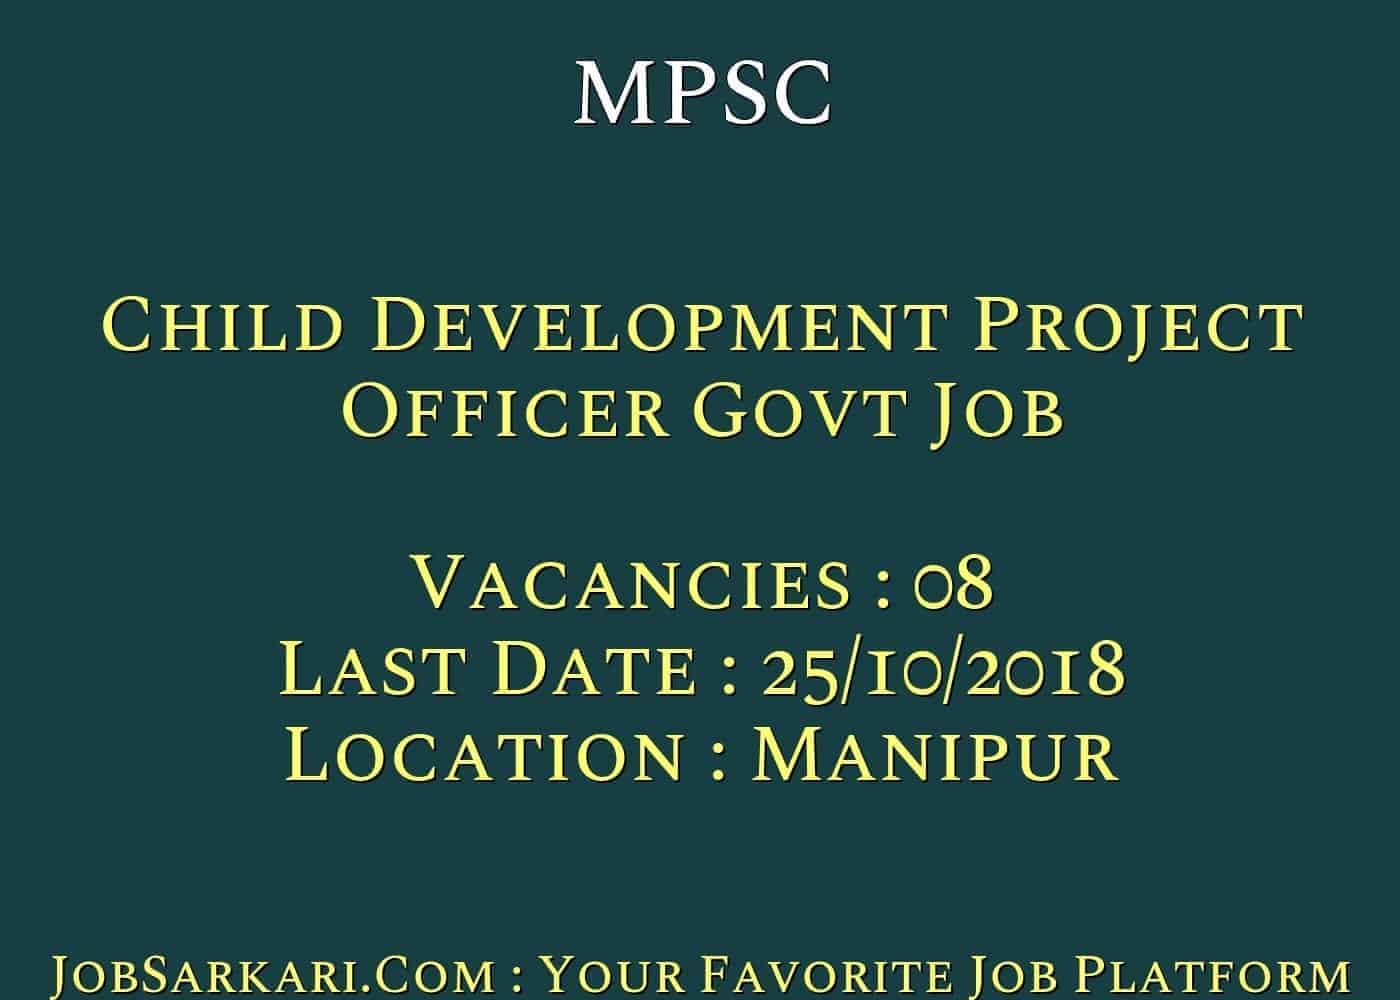 MPSC Recruitment 2018 for Child Development Project Officer Govt Job